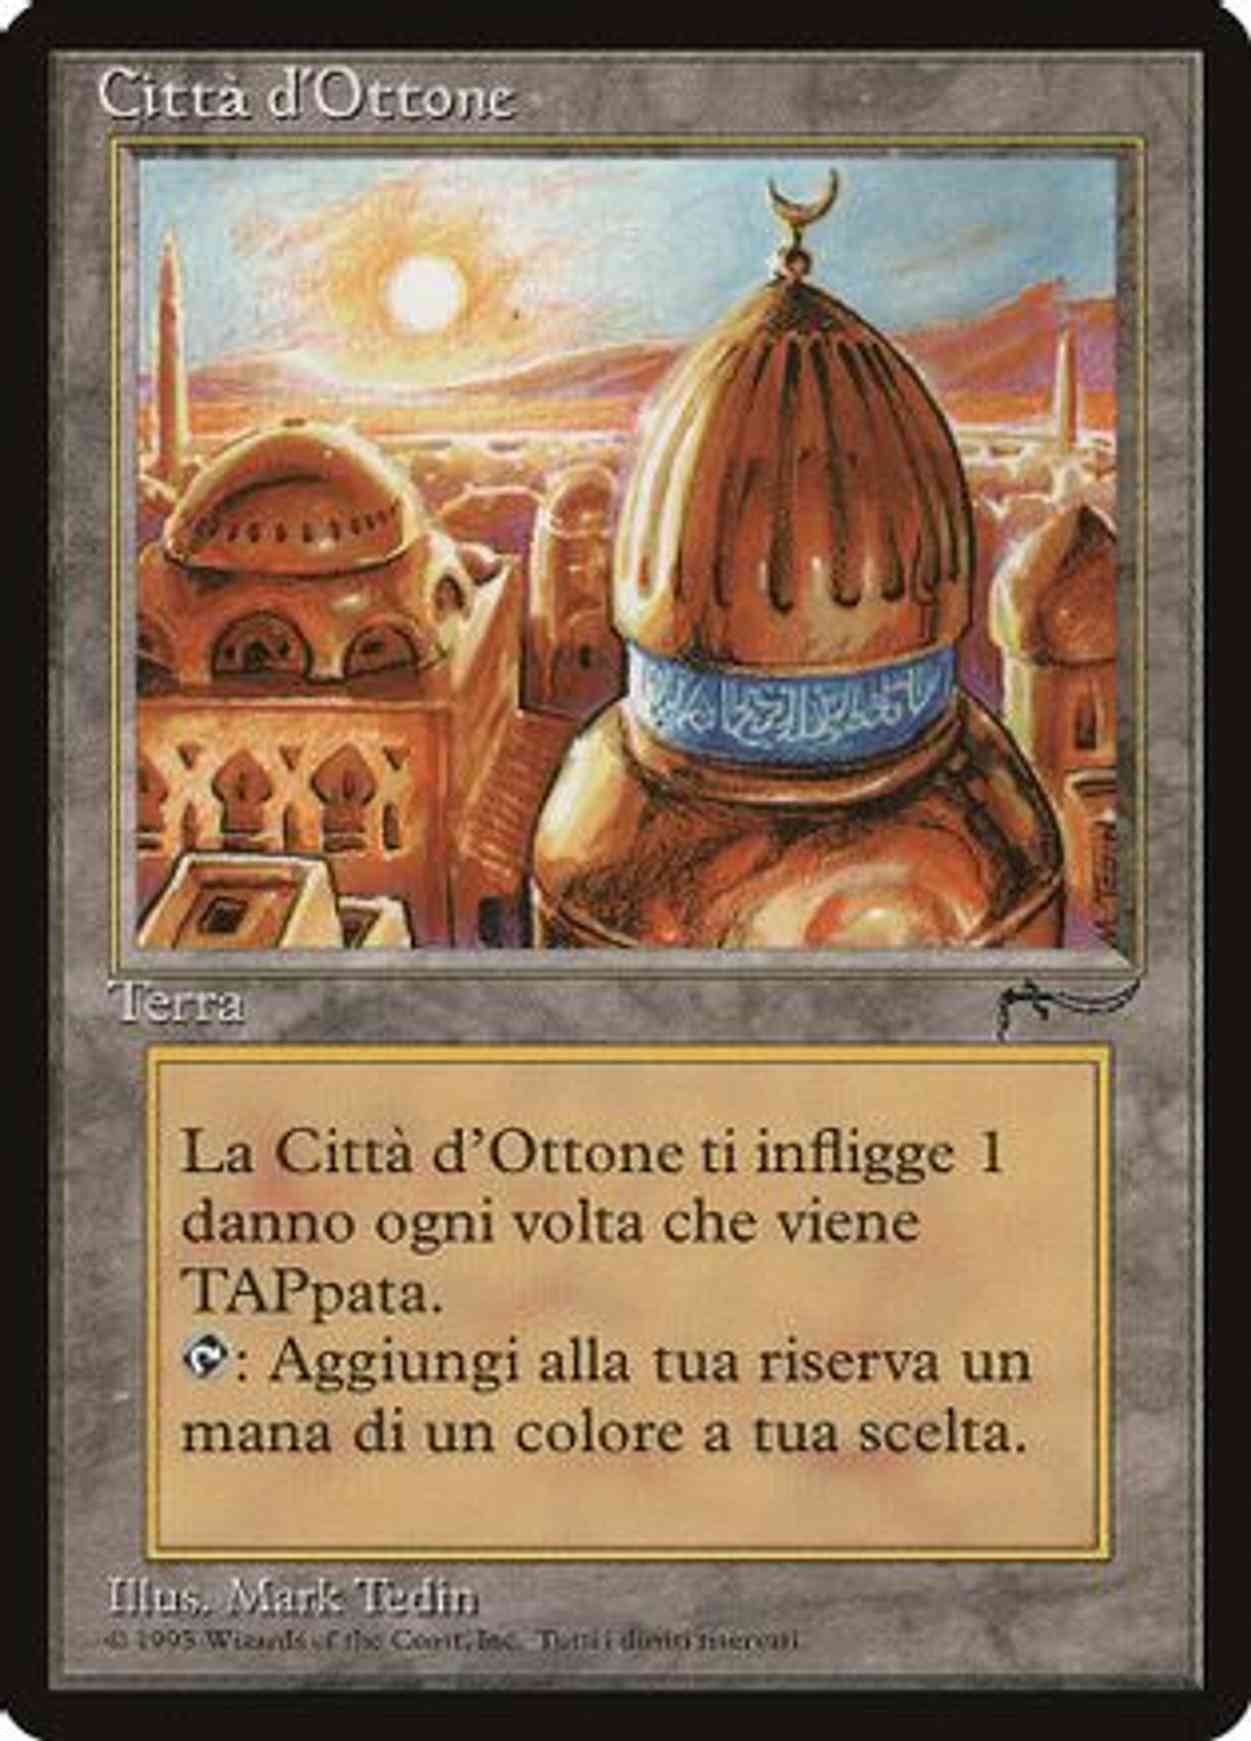 City of Brass (Italian) - "Citta d'Ottone" magic card front